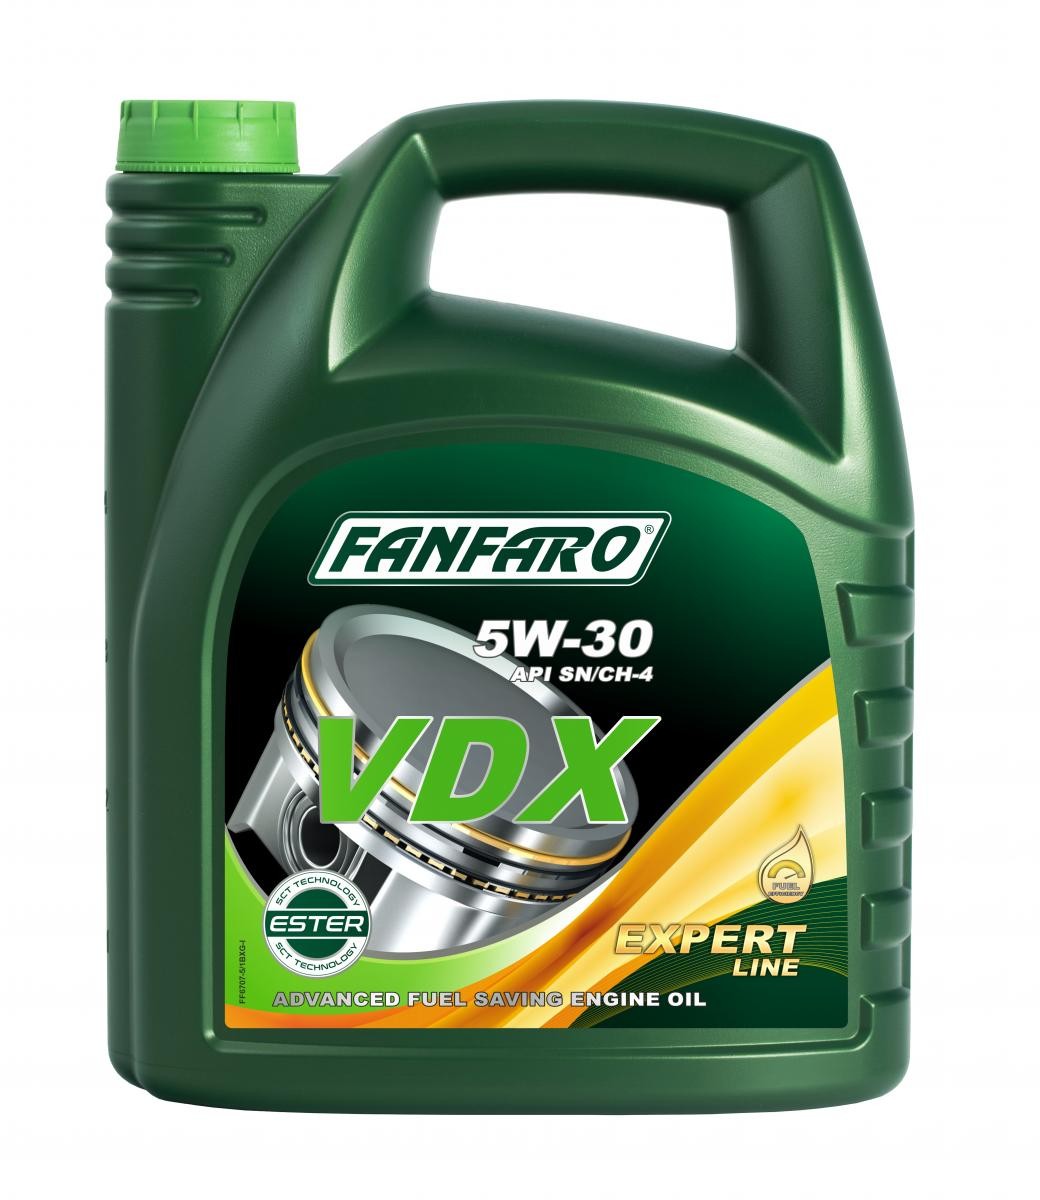 Kaufen Motorenöl FANFARO FF6707-5 Expert Line, VDX 5W-30, 5l, Synthetiköl